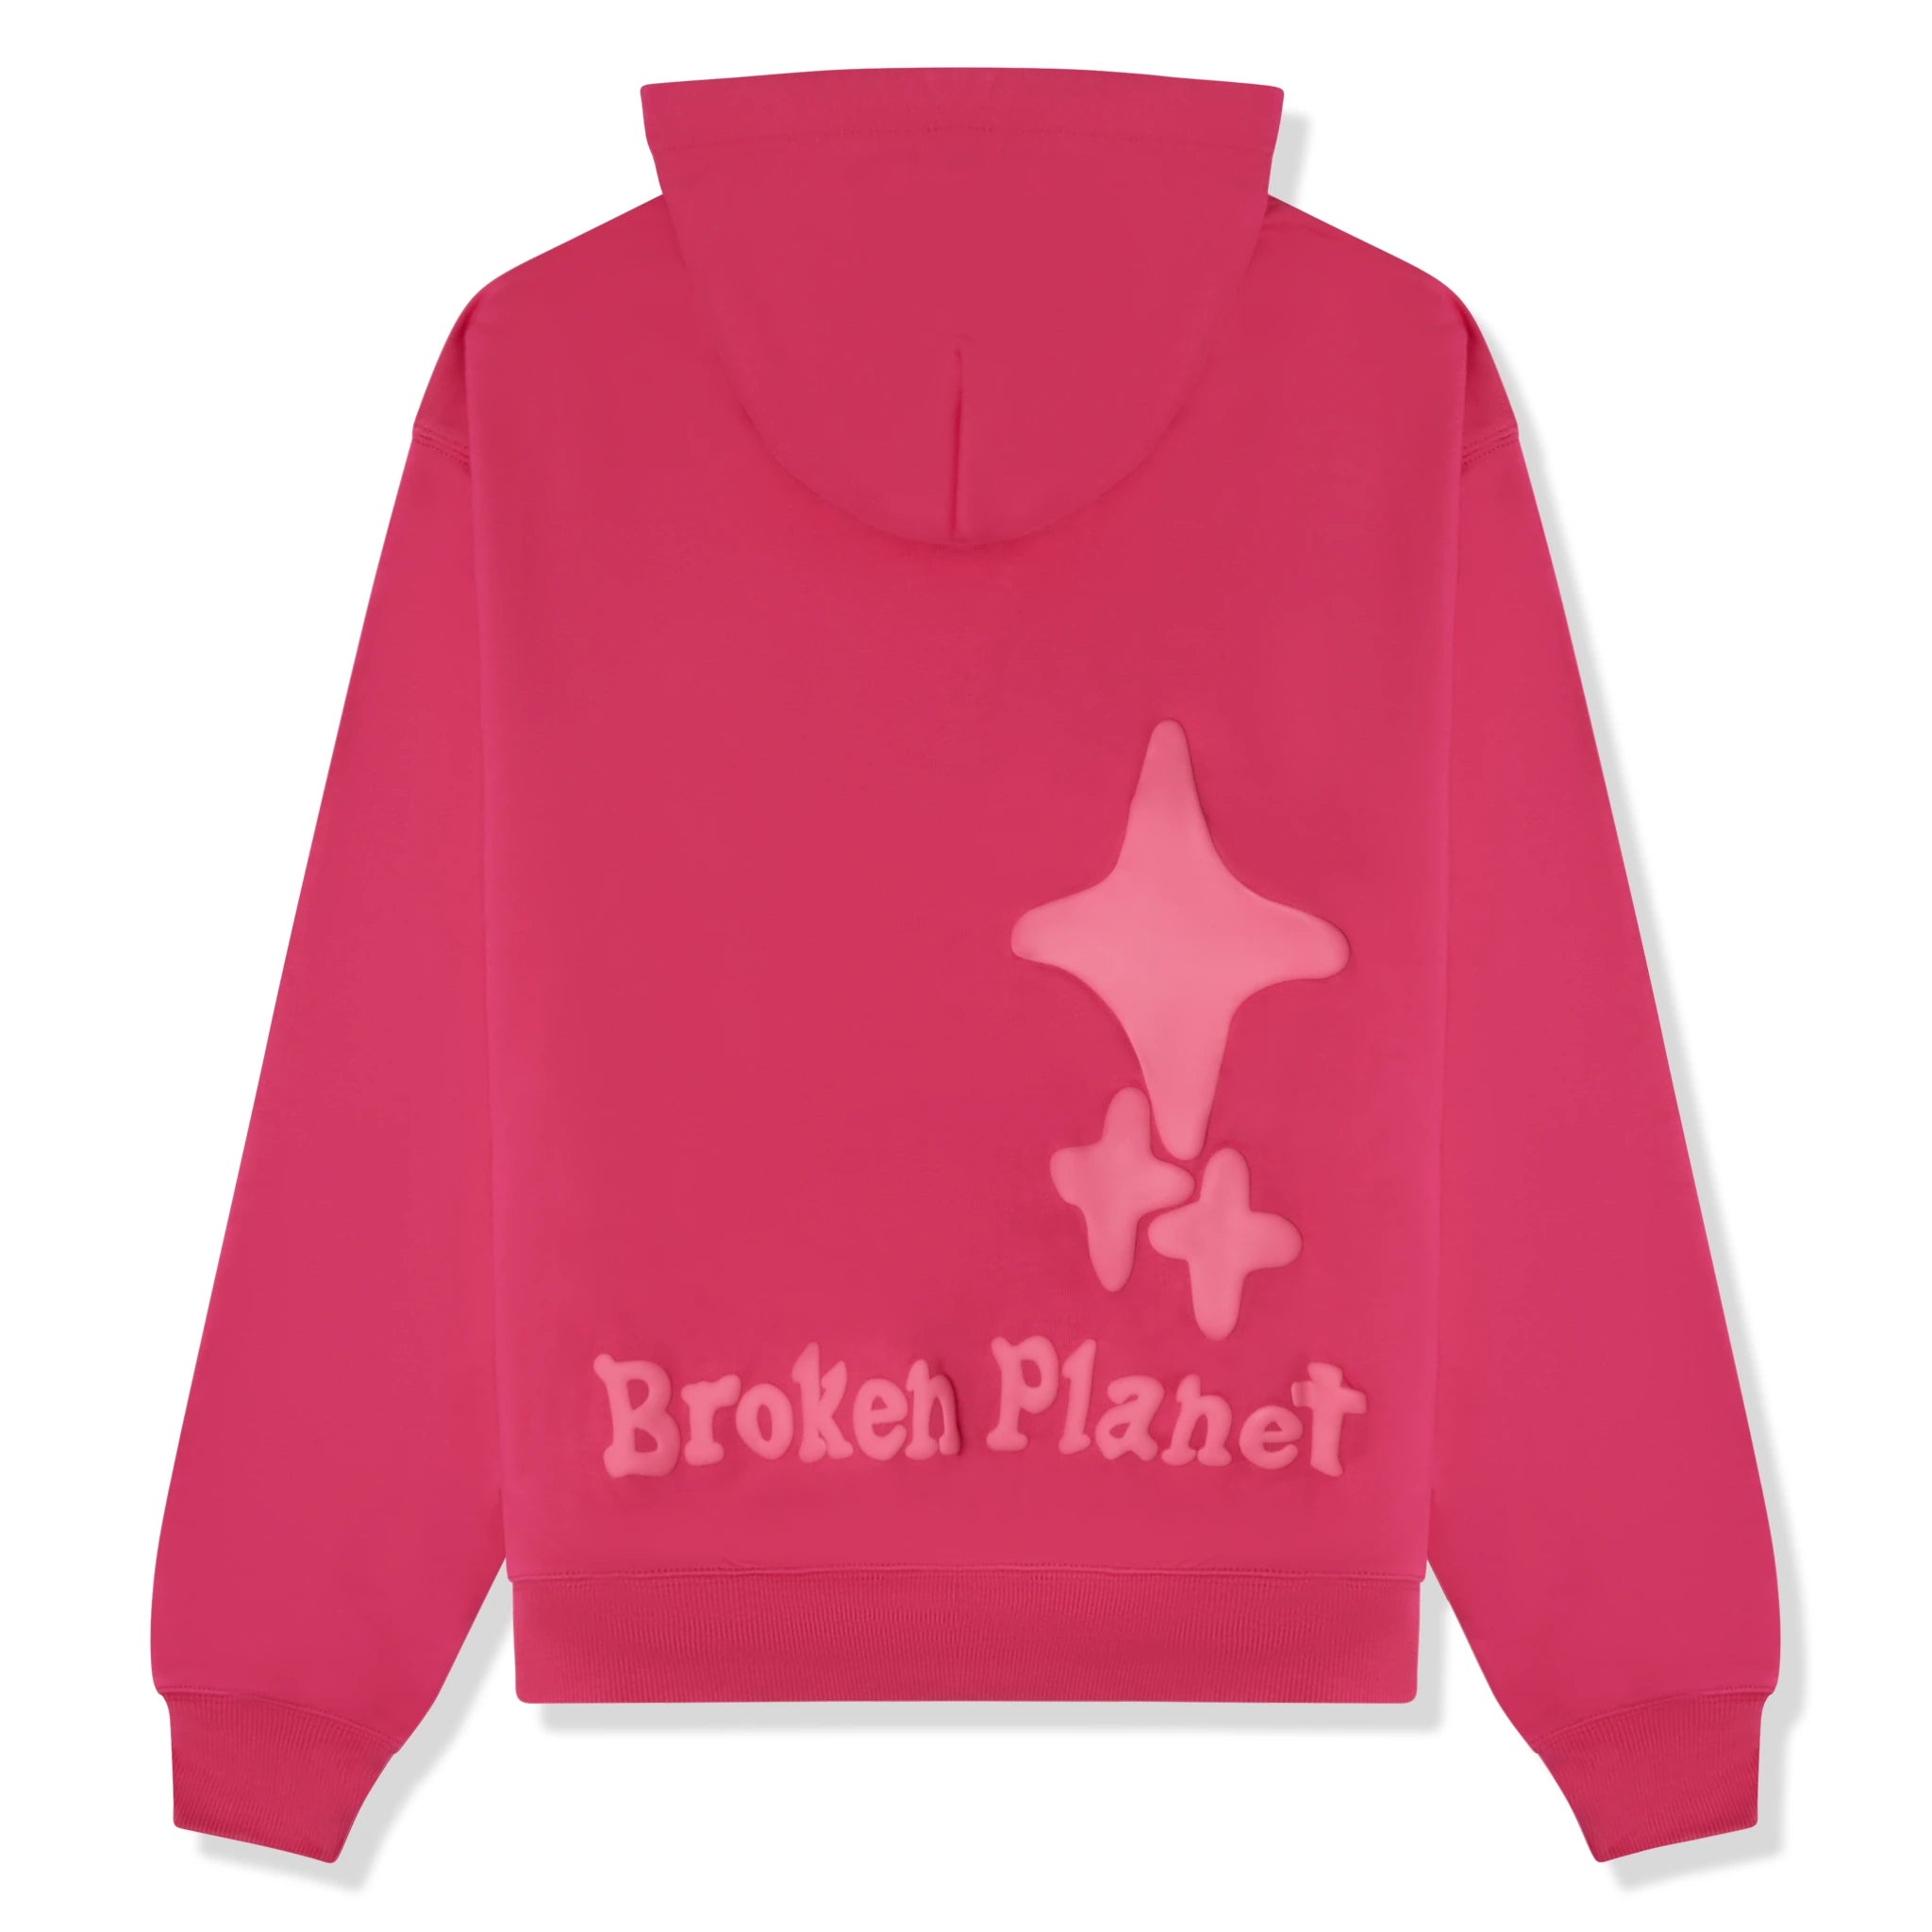 Back view of Broken Planet Monochrome Fuchsia Pink Hoodie